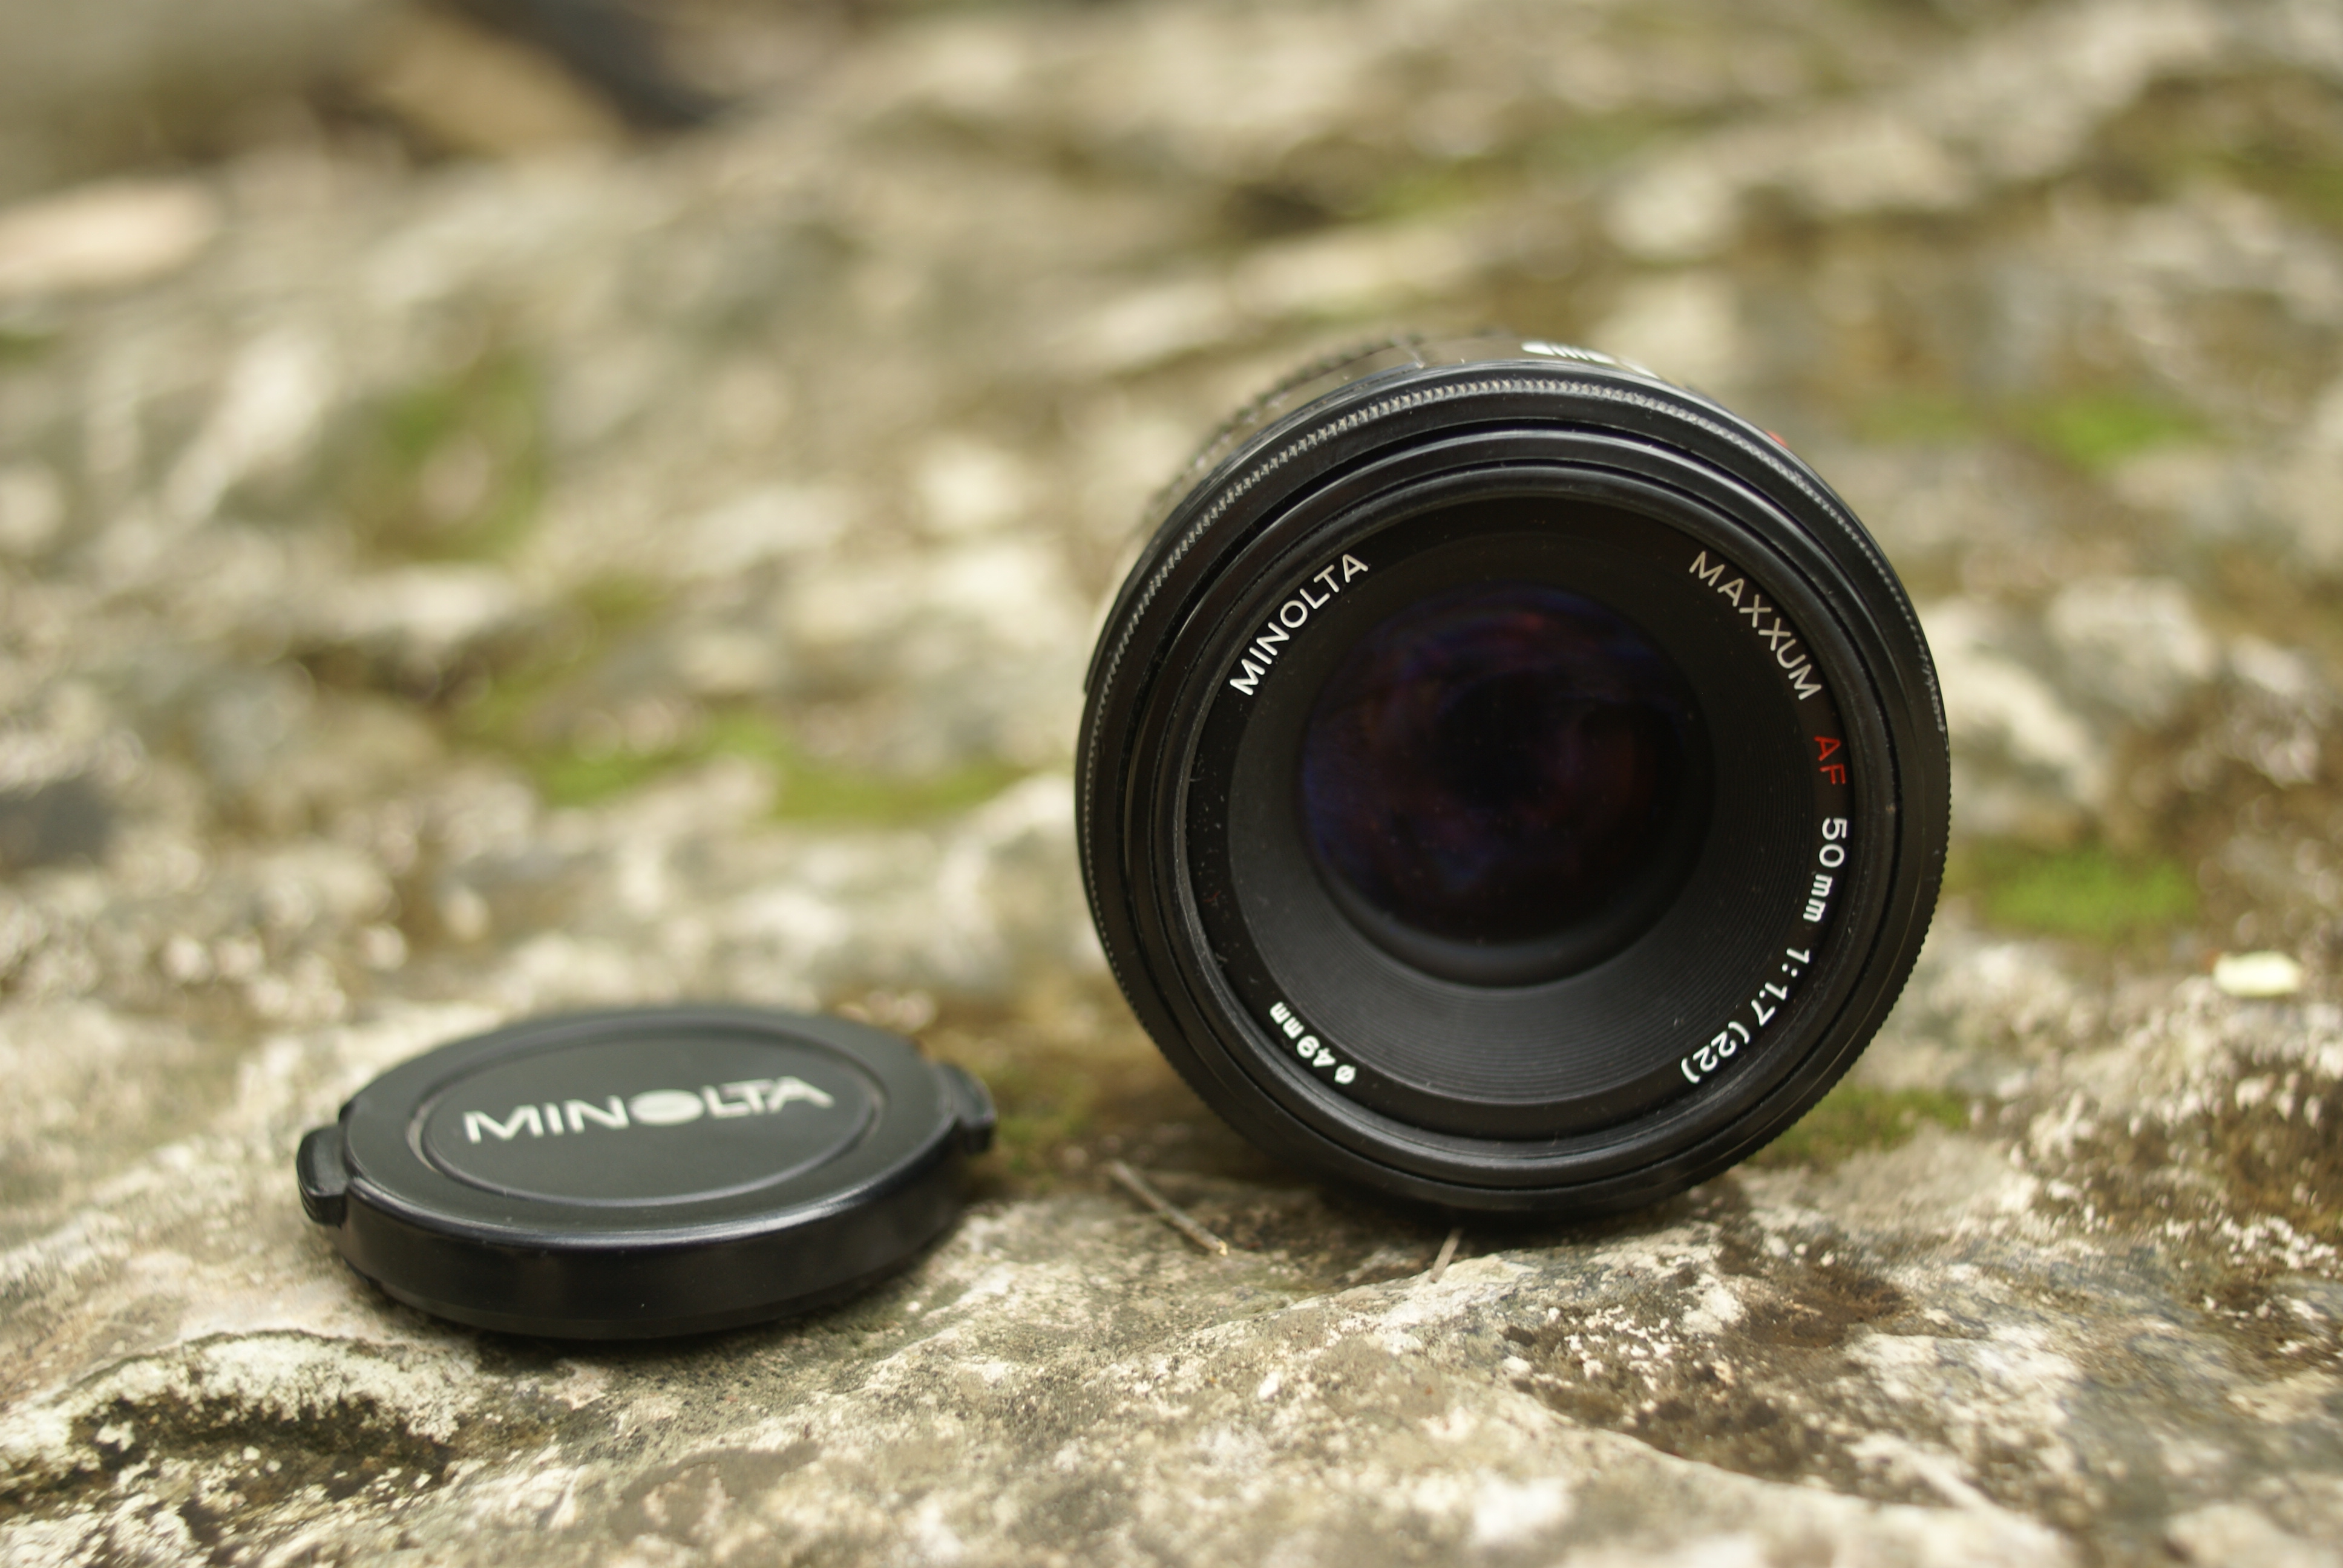 Minolta 50mm f1.7 Autofocusing Lens is a bargain